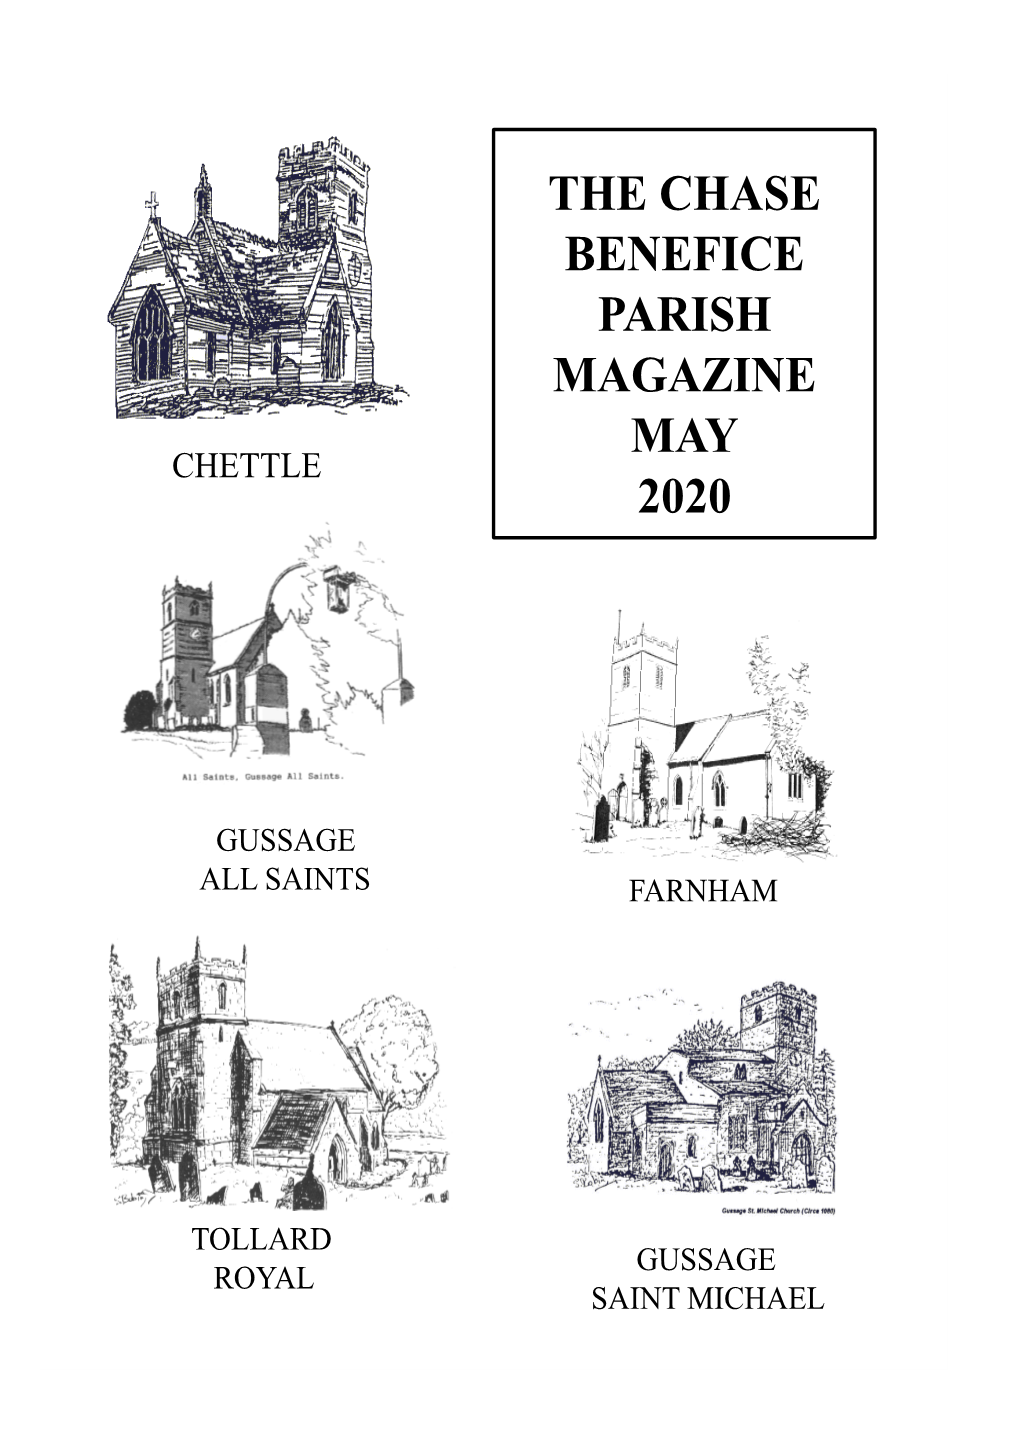 The Chase Benefice Parish Magazine May 2020